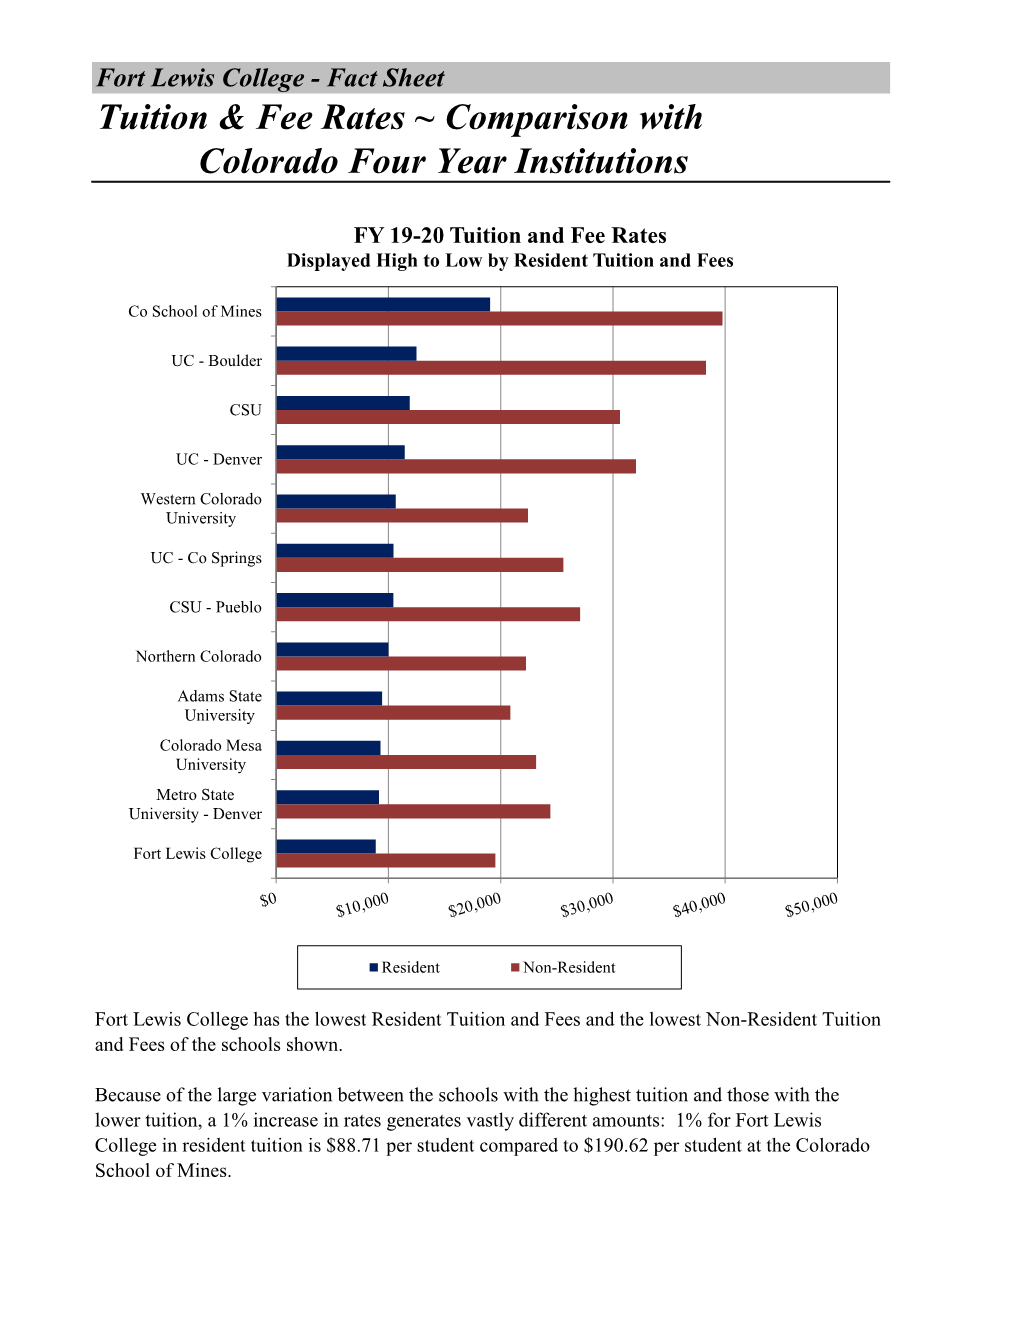 Tuition & Fee Rates ~ Comparison with Colorado